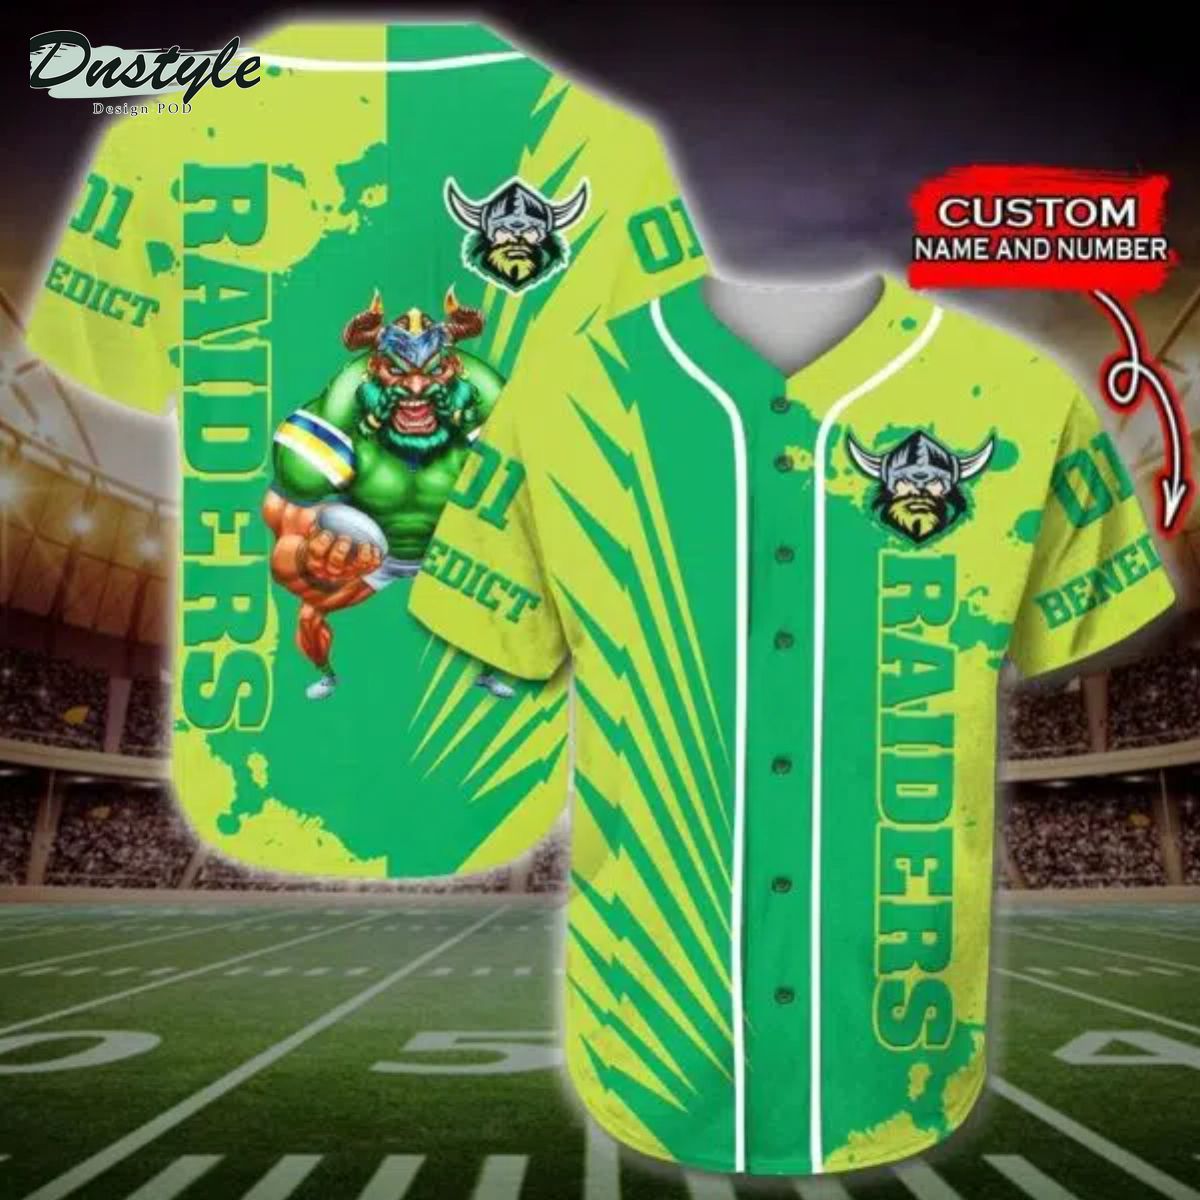 Brisbane Broncos NRL Custom Name And Number Baseball Jersey